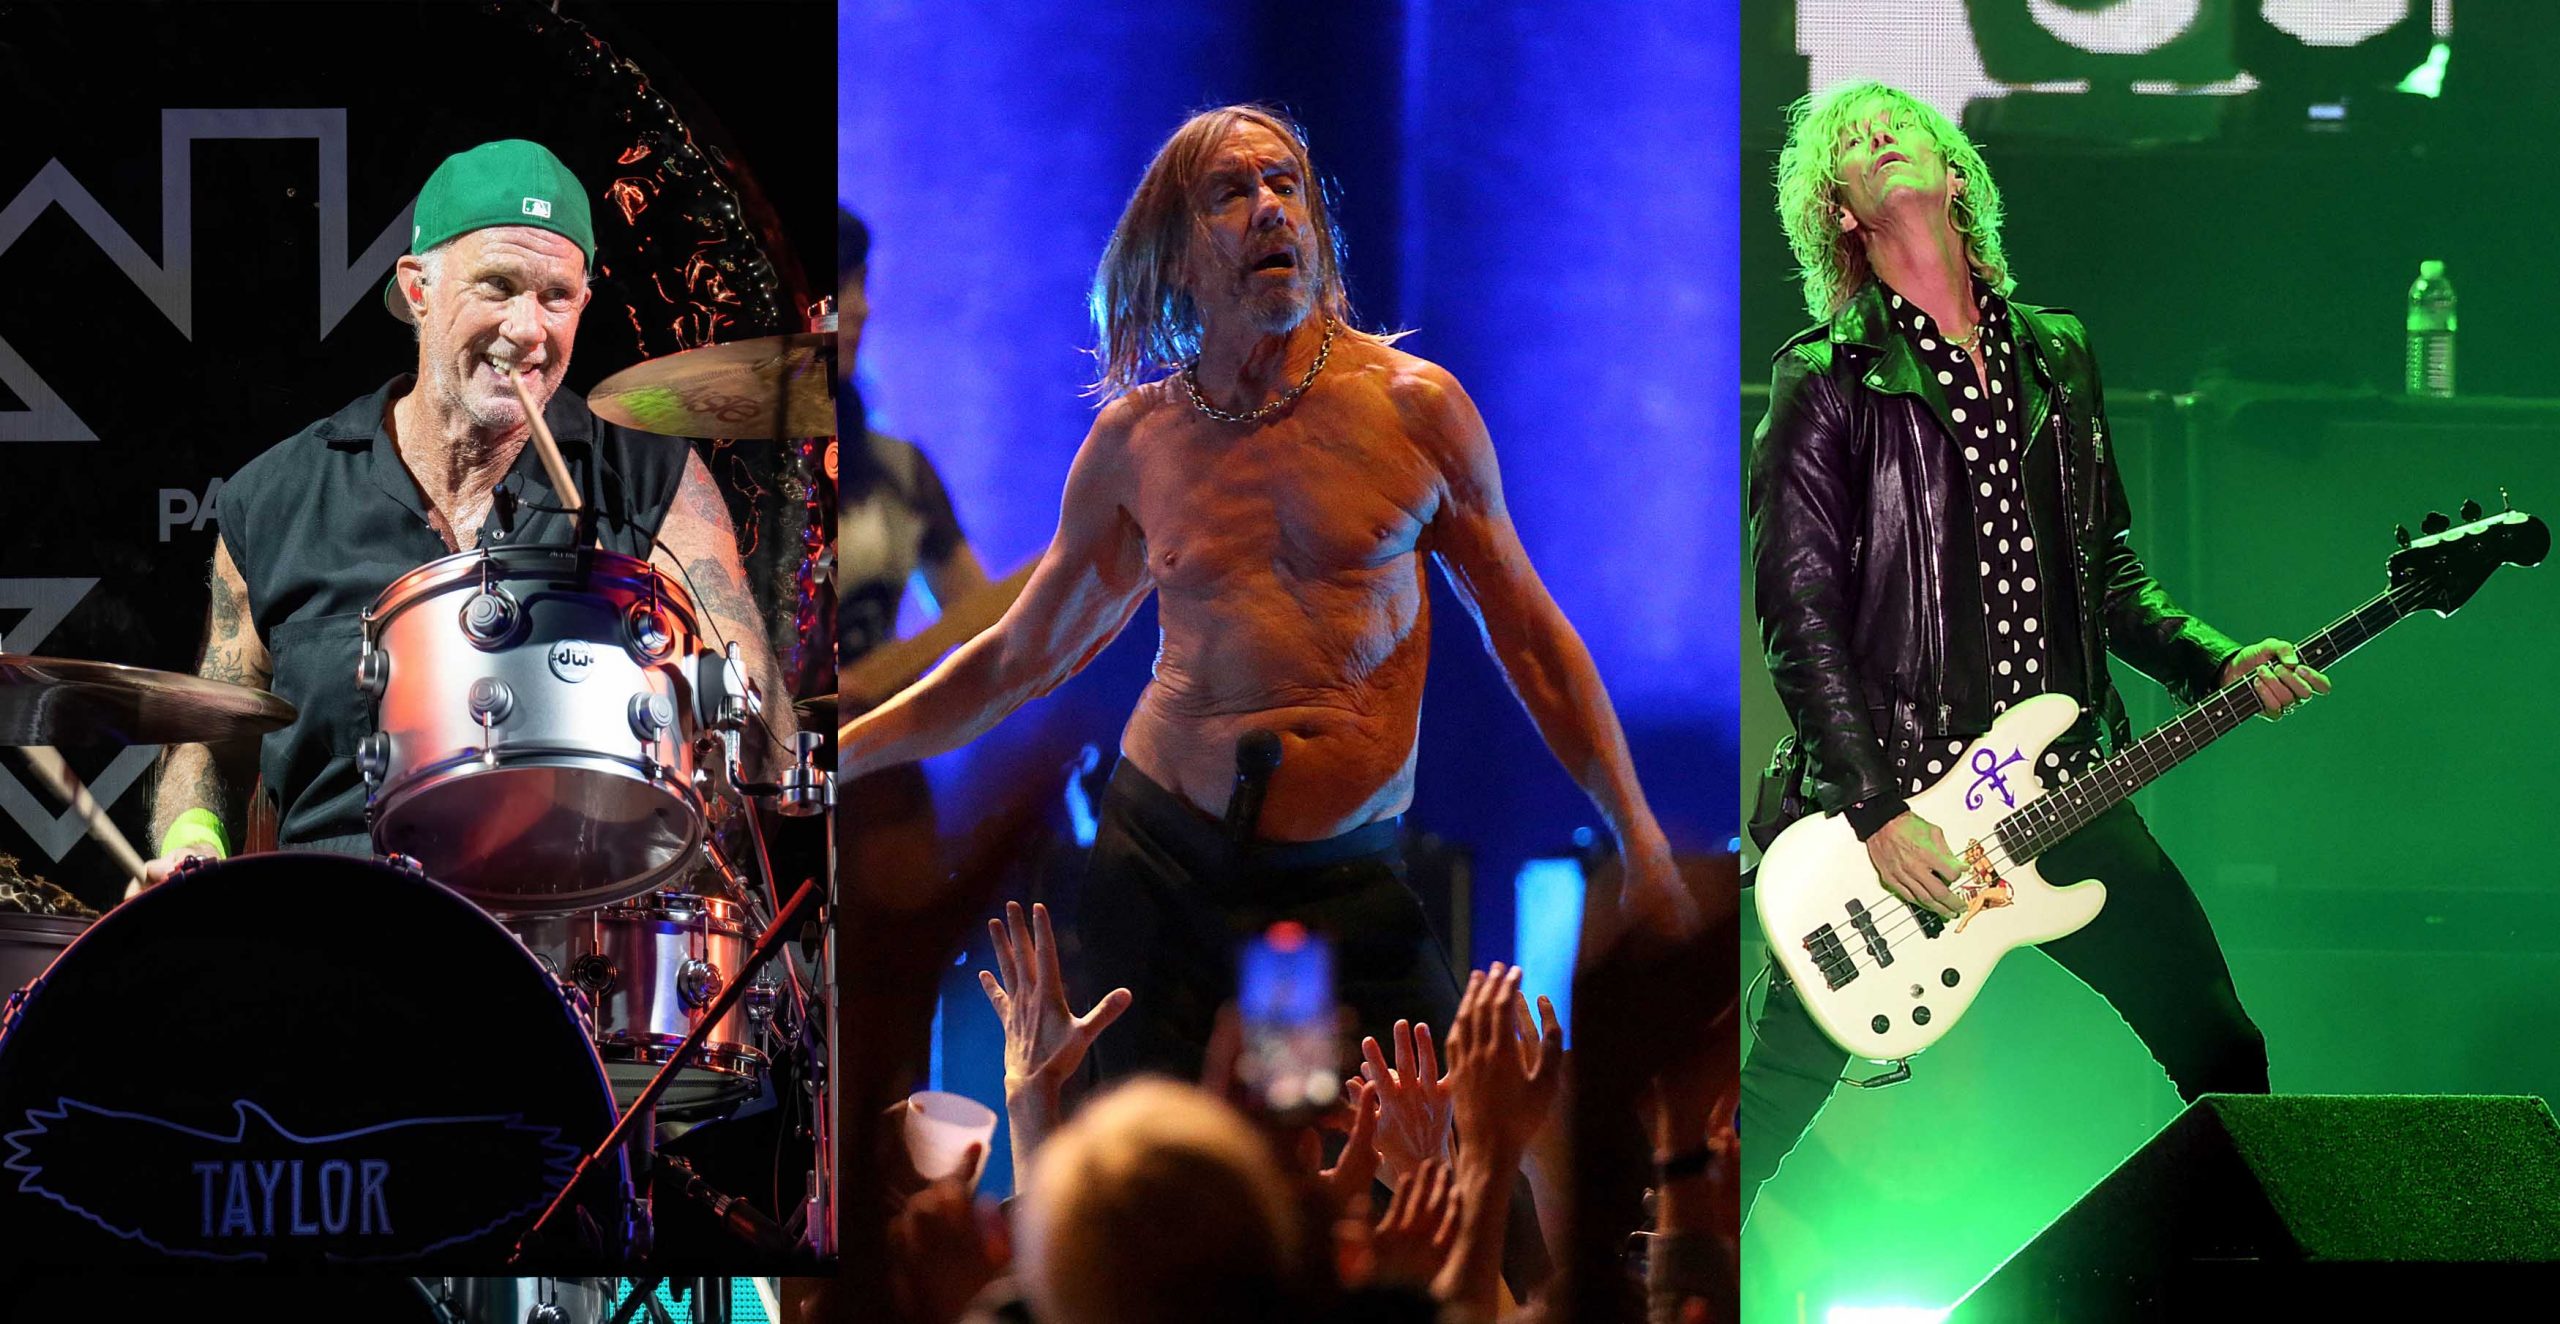 Iggy Pop lanzó “Frenzy”, un poderoso tema junto al bajista de Guns N’ Roses y el baterista de los Red Hot Chili Peppers